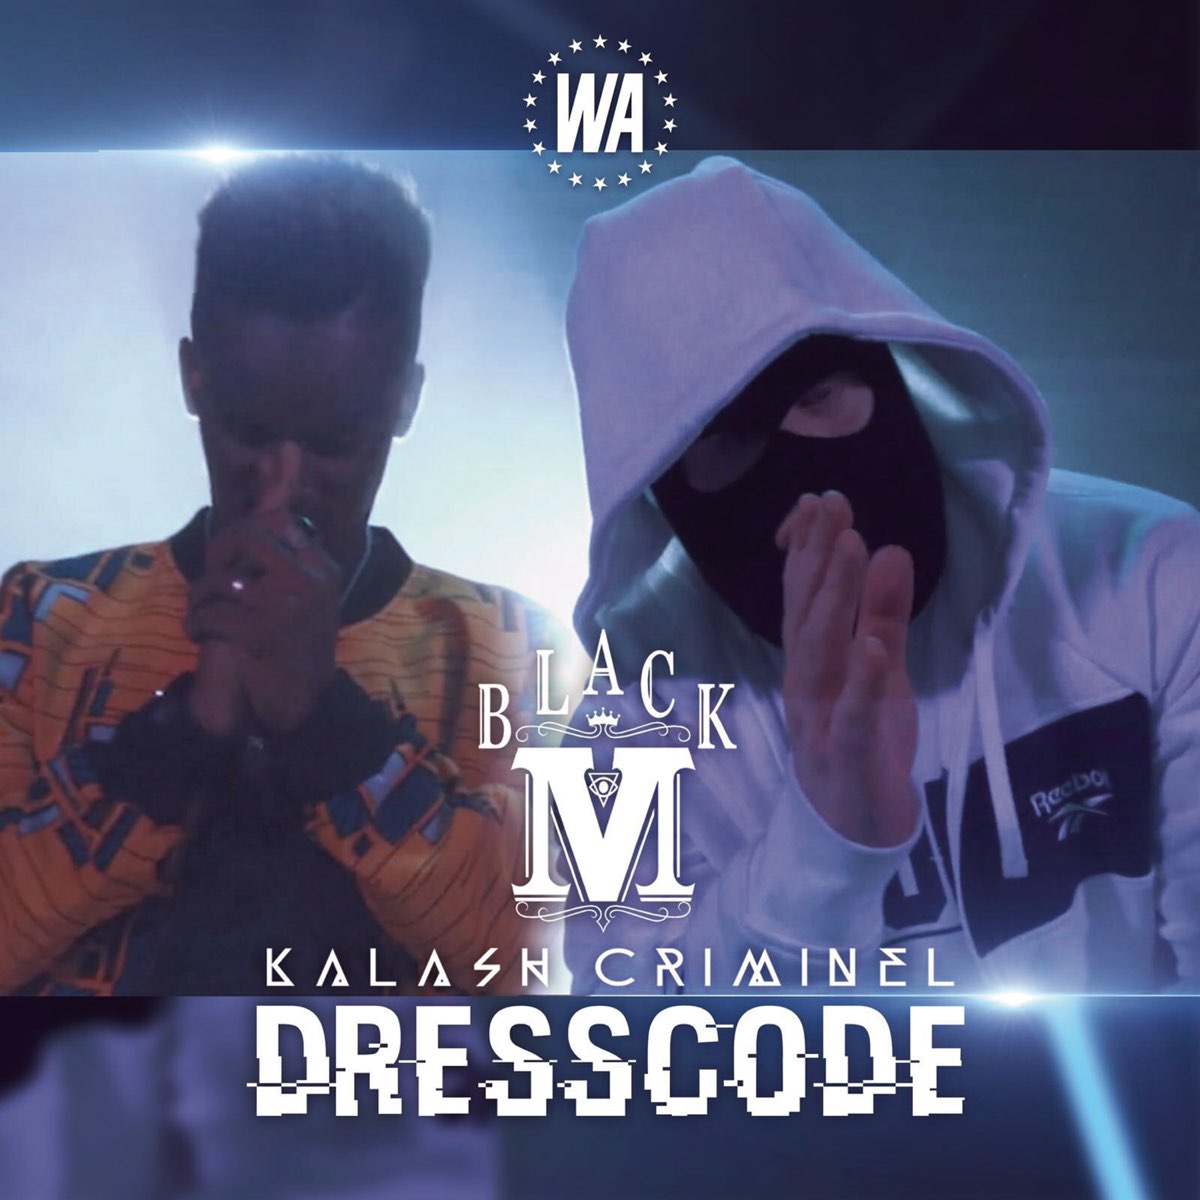 Dress Code (feat. Kalash Criminel) - Single by Black M on Apple Music